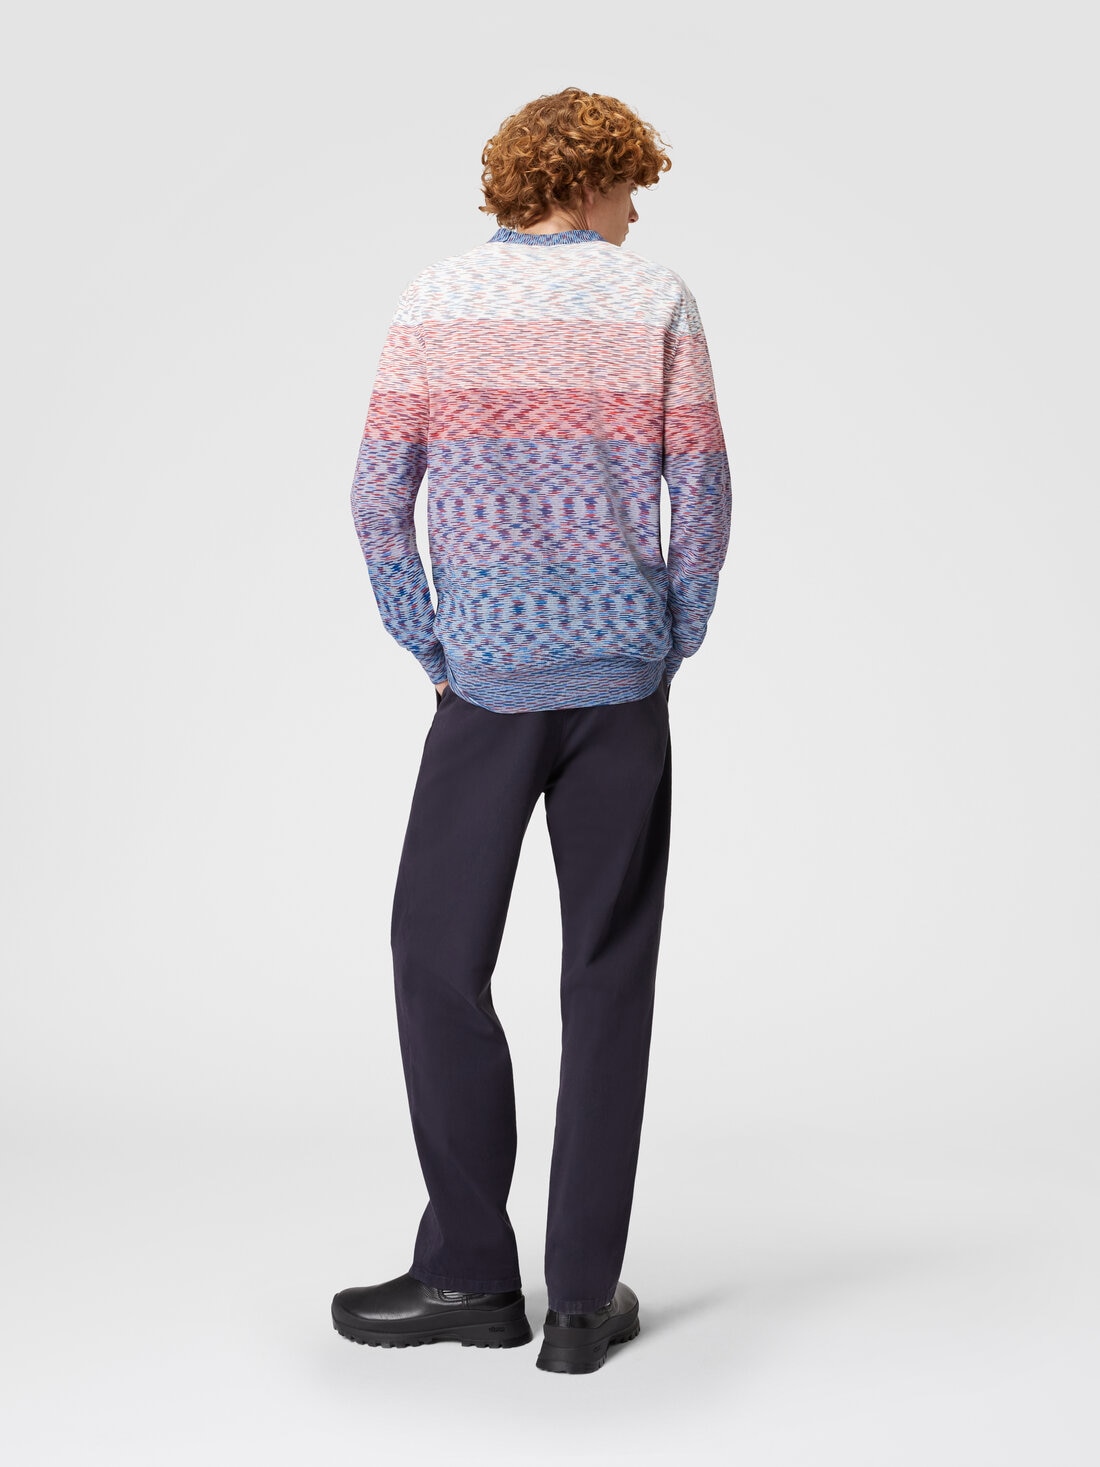 Cardigan in dégradé slub cotton knit, Multicoloured  - US24SM0CBK012QS415E - 2